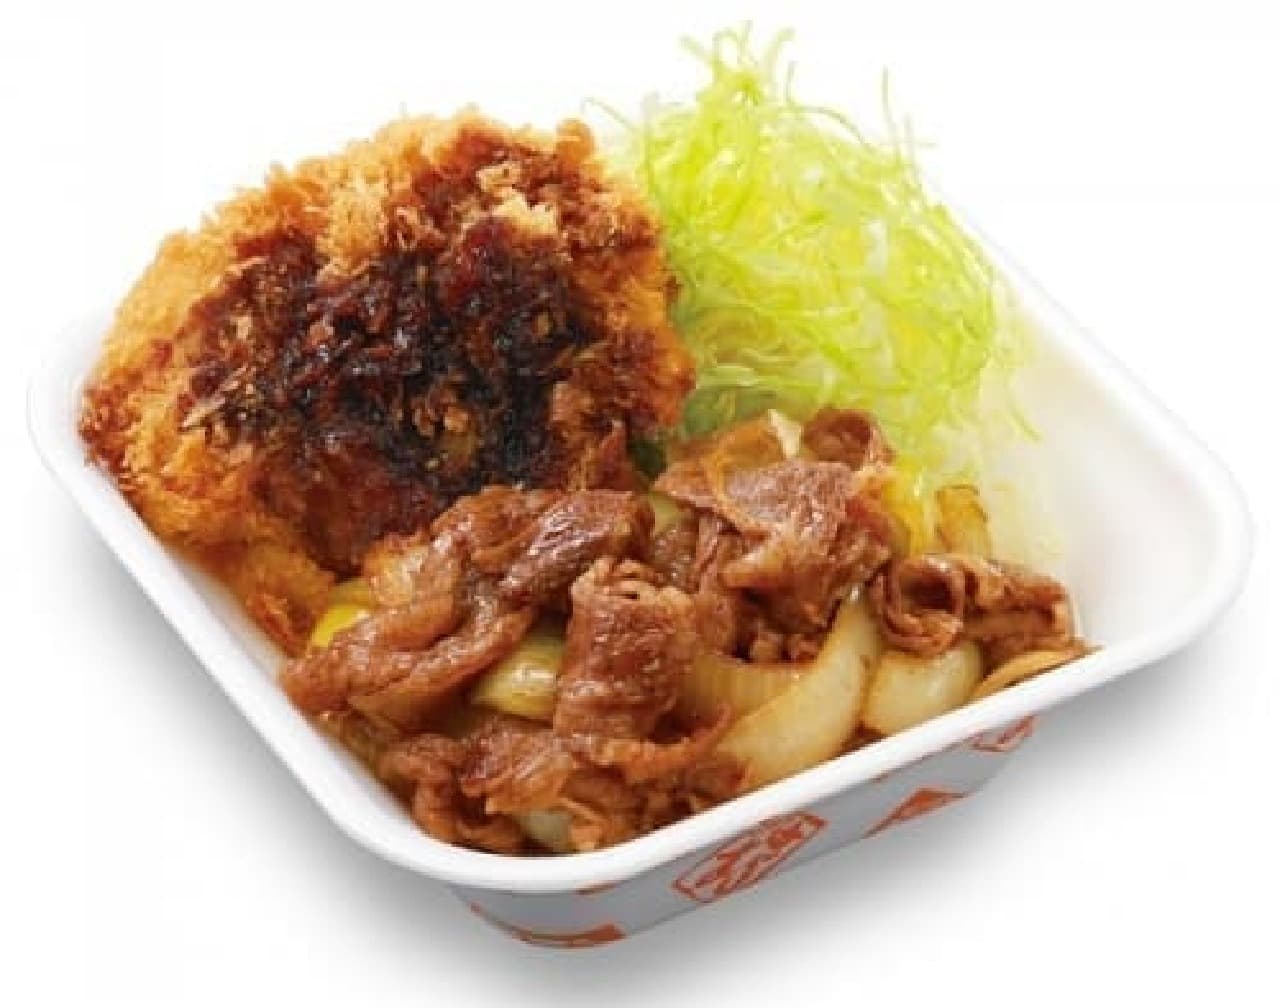 Katsuya "Beef rose grilled chicken cutlet bowl lunch box"